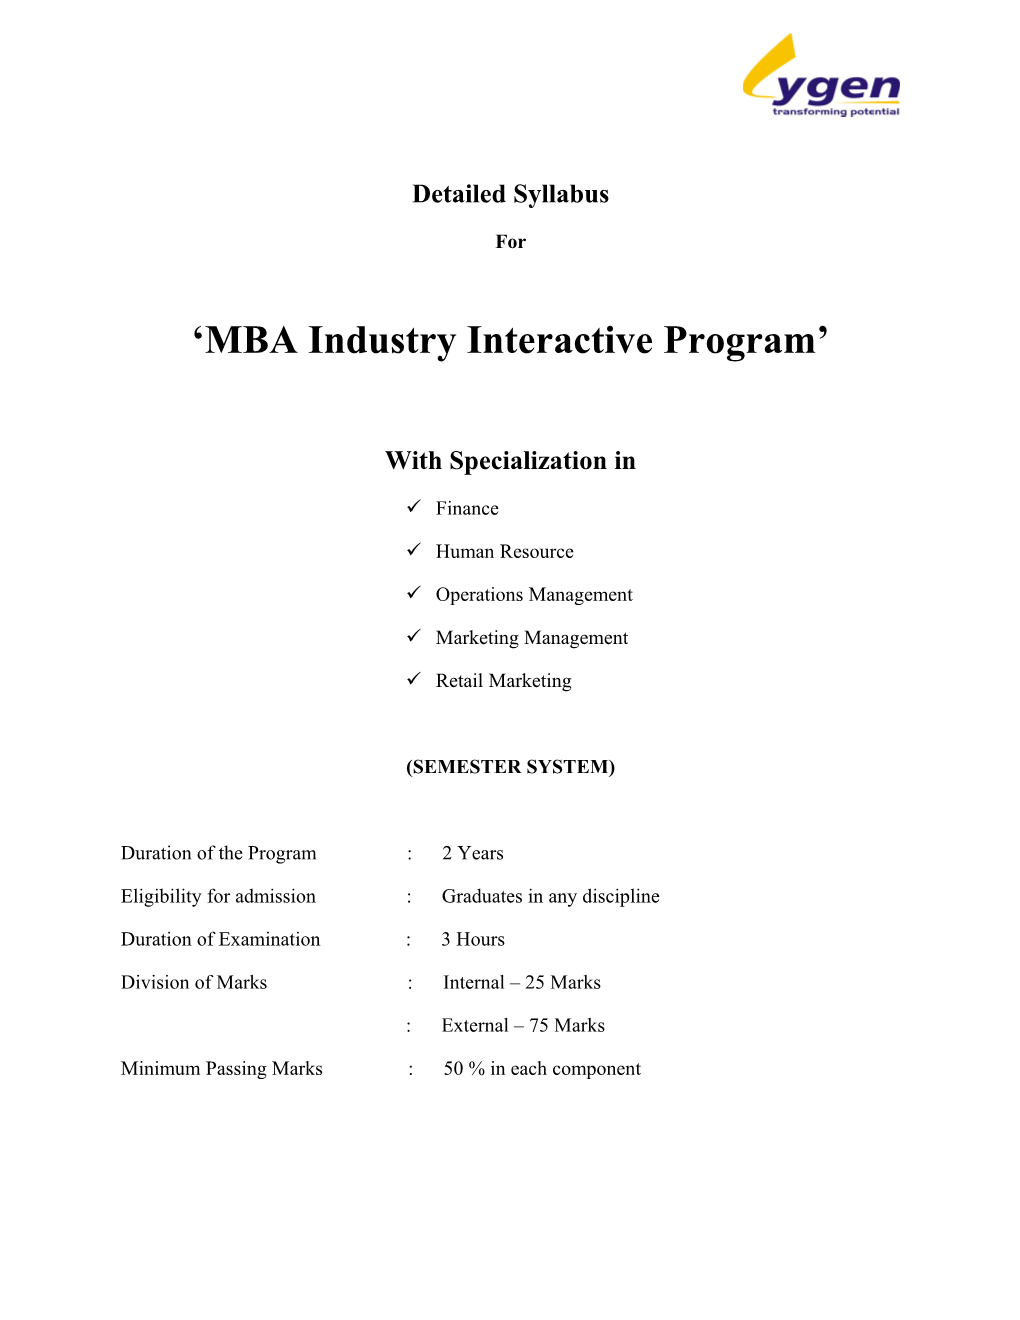 MBA Industry Interactive Program